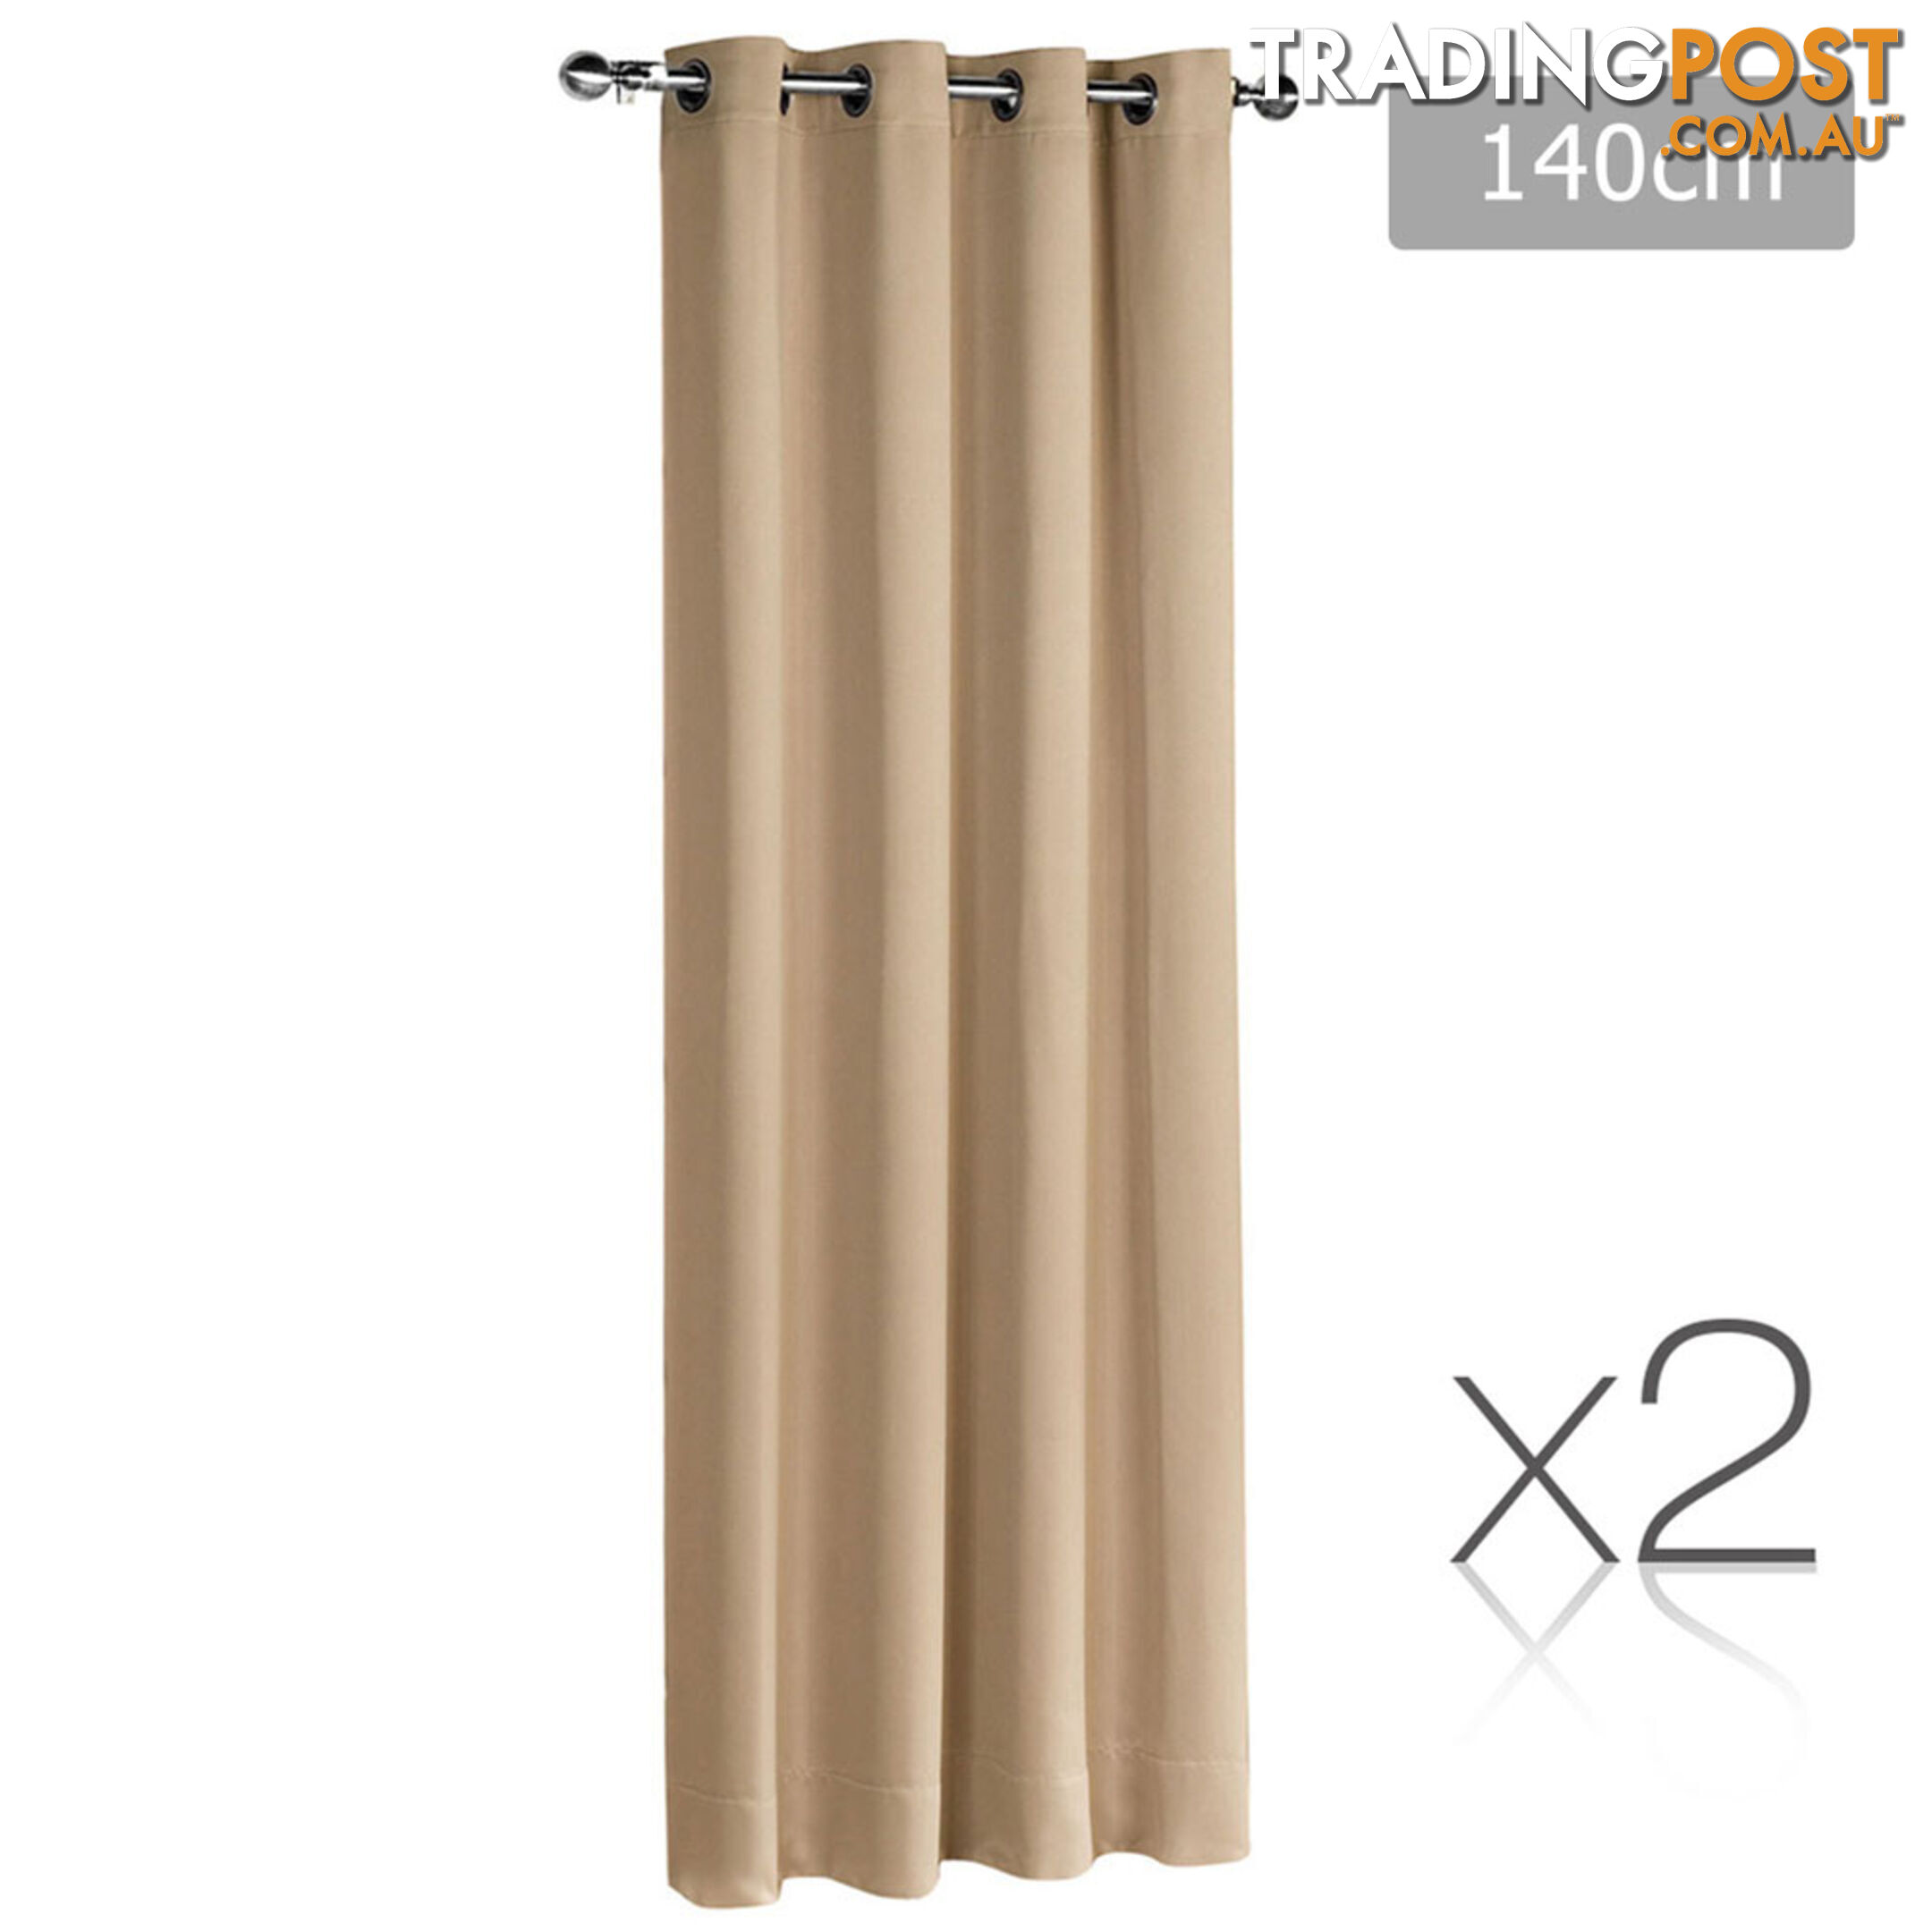 Set of 2 ArtQueen 3 Pass Eyelet Blockout Curtain Latte 140cm